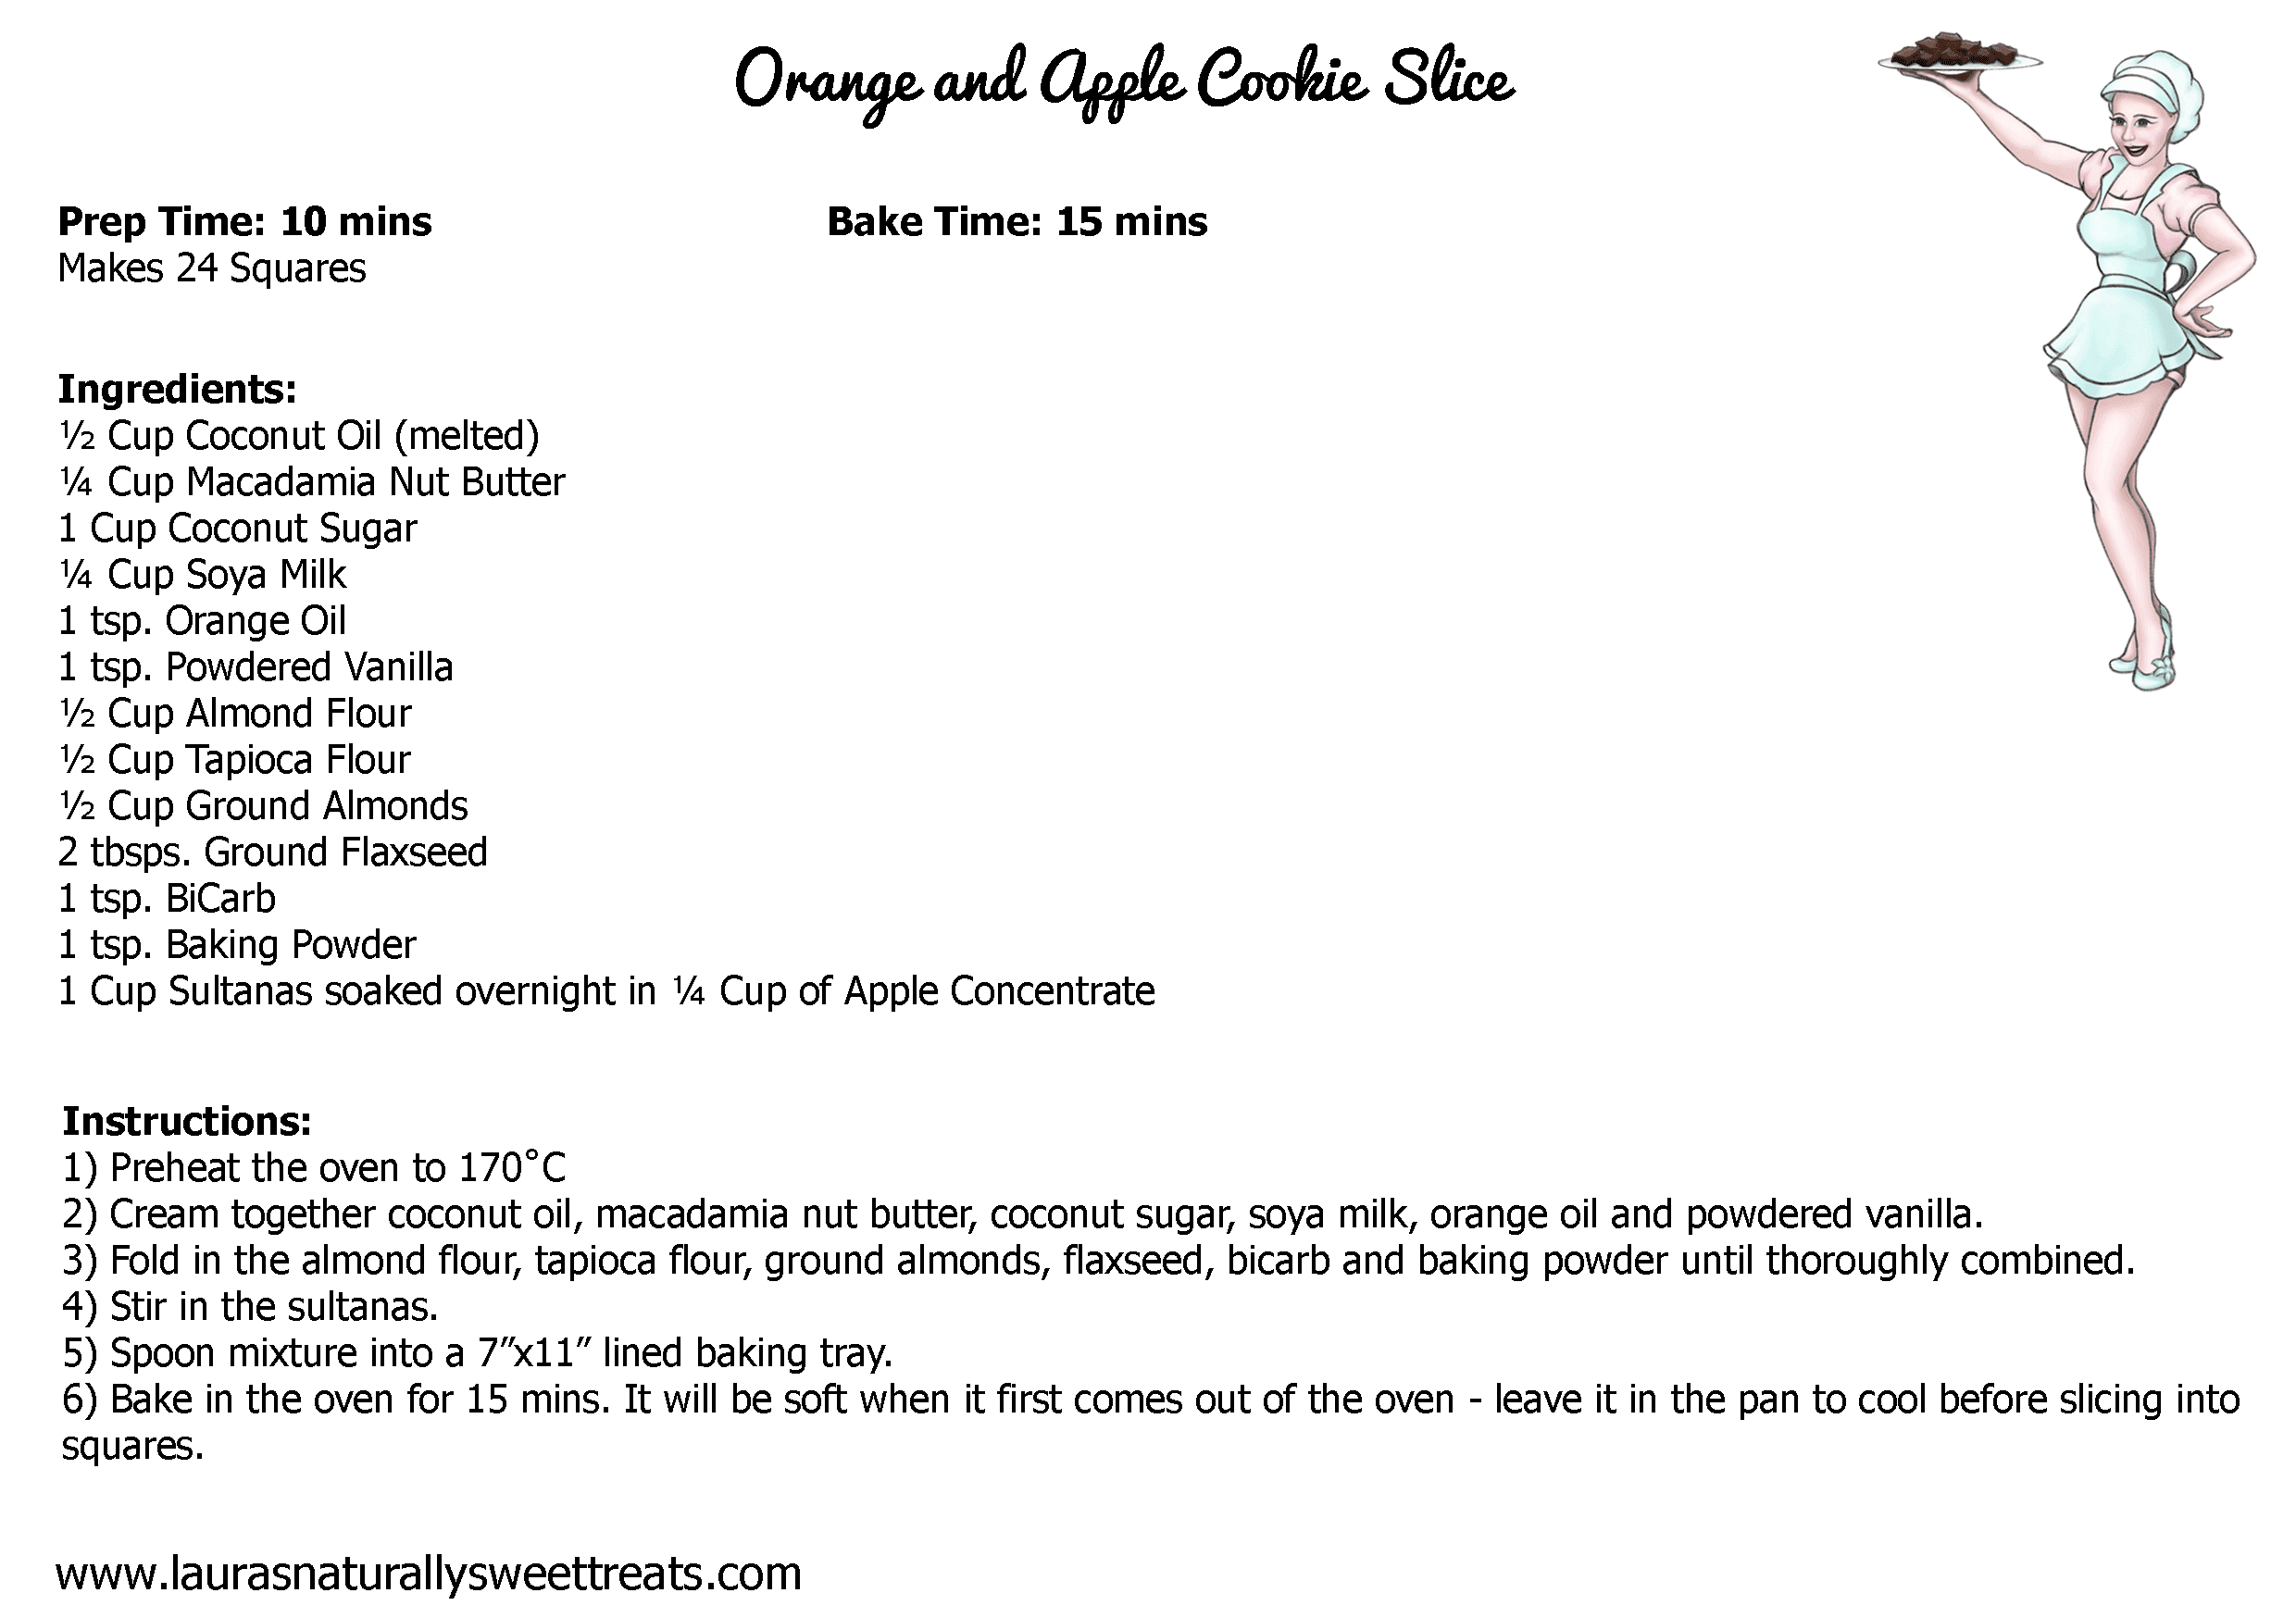 orange-and-apple-cookie-slice-recipe-card